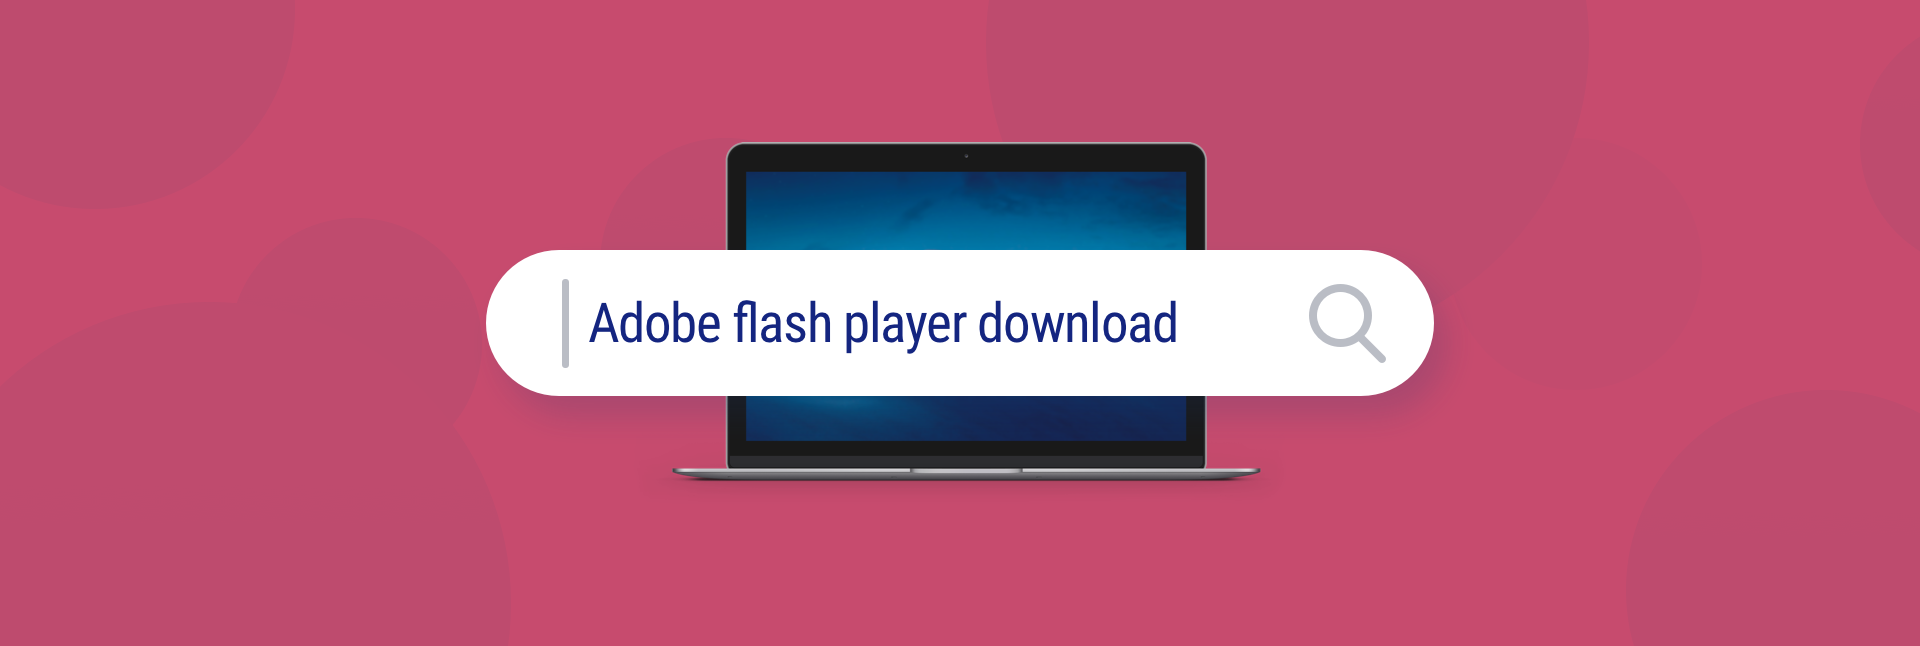 latest adobe flash player for mac os x 10.6.8